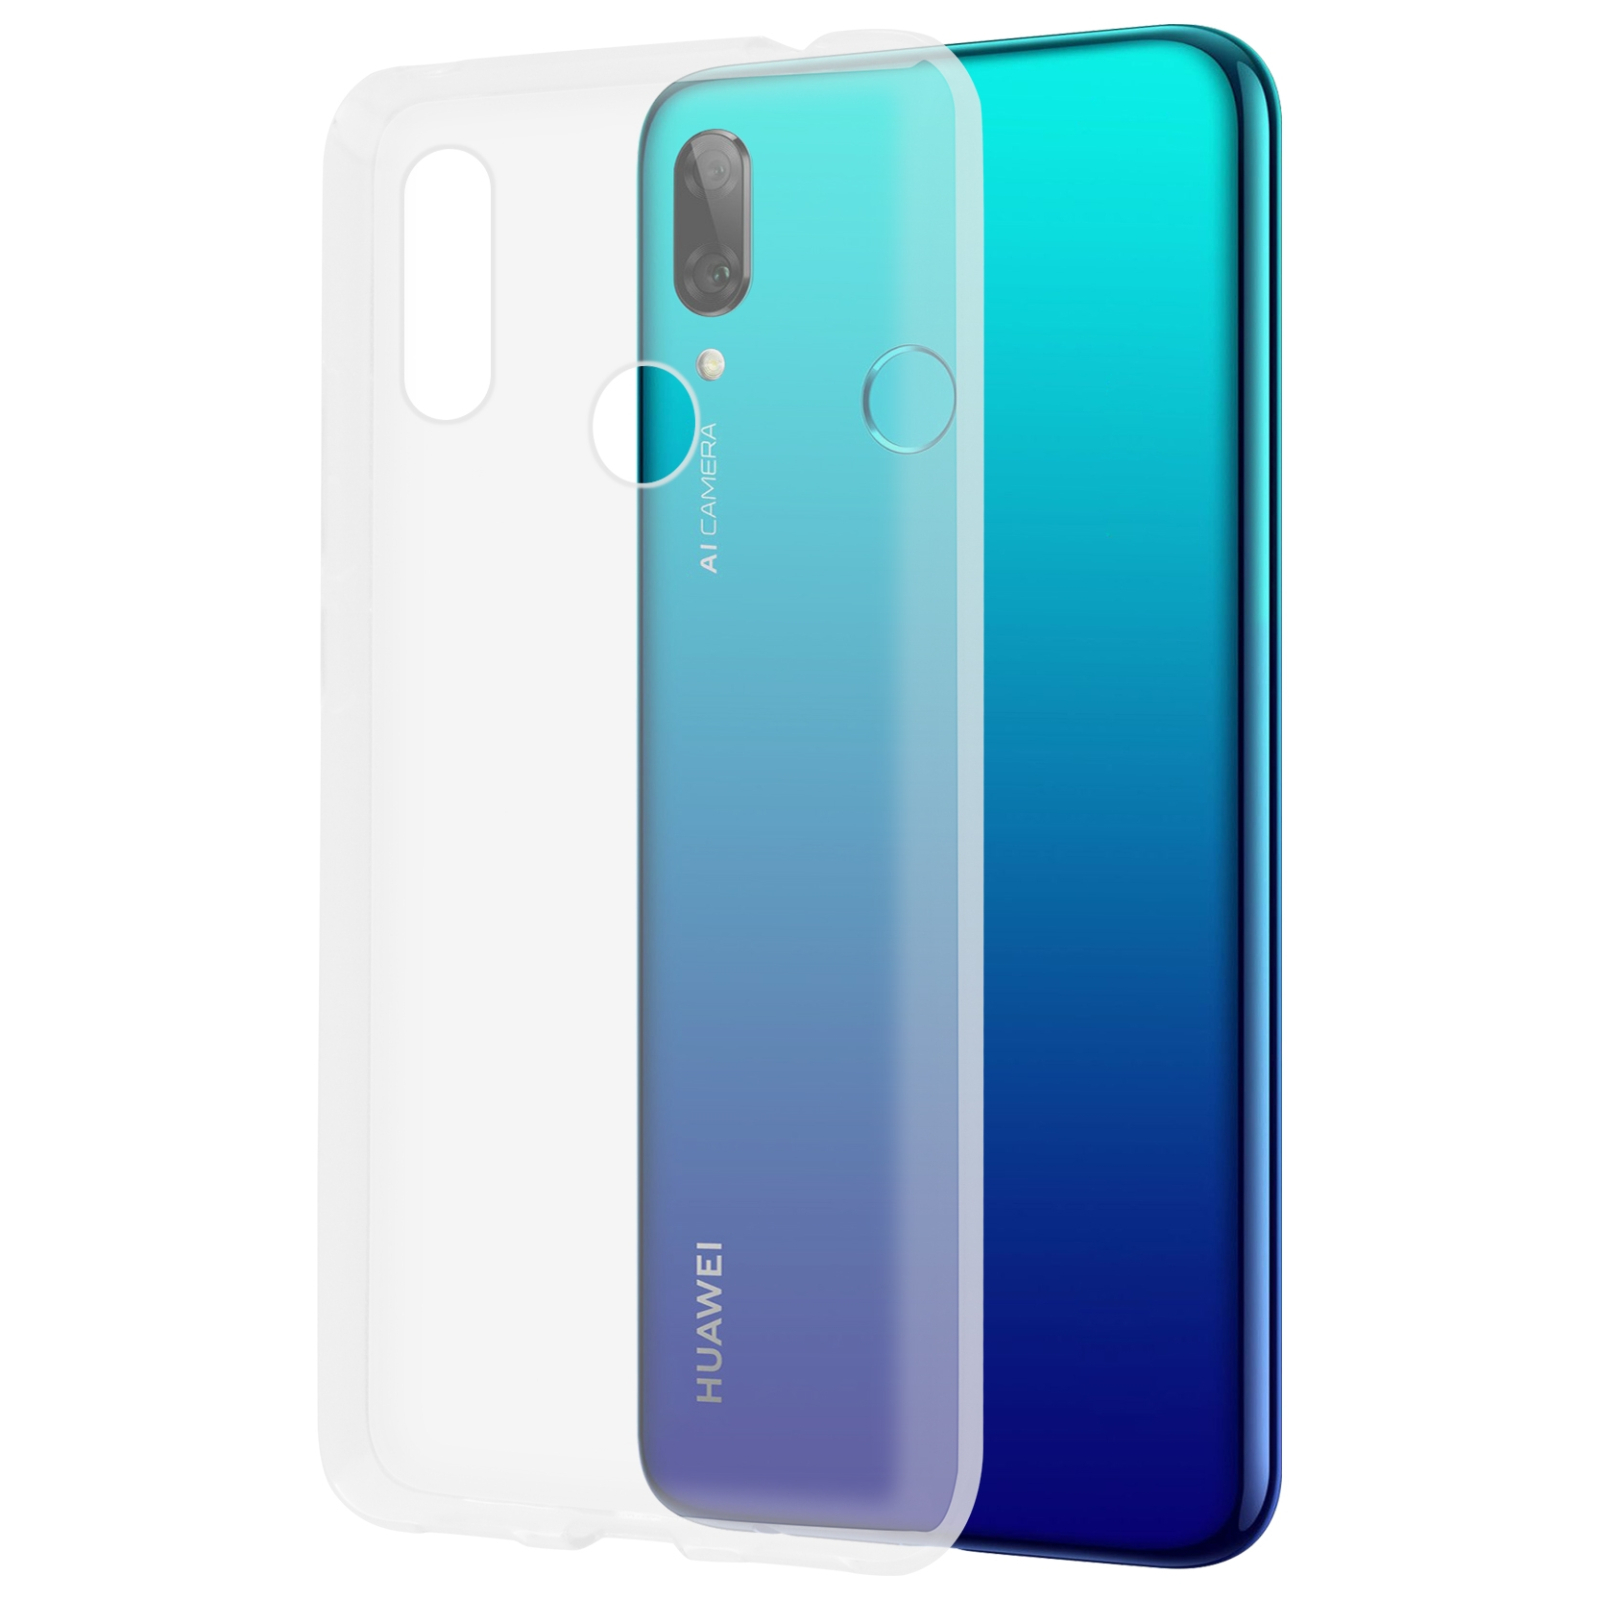 Чехол для мобильного телефона Laudtec для Huawei Y7 2019 Clear tpu (Transperent) (LC-HY72019T)